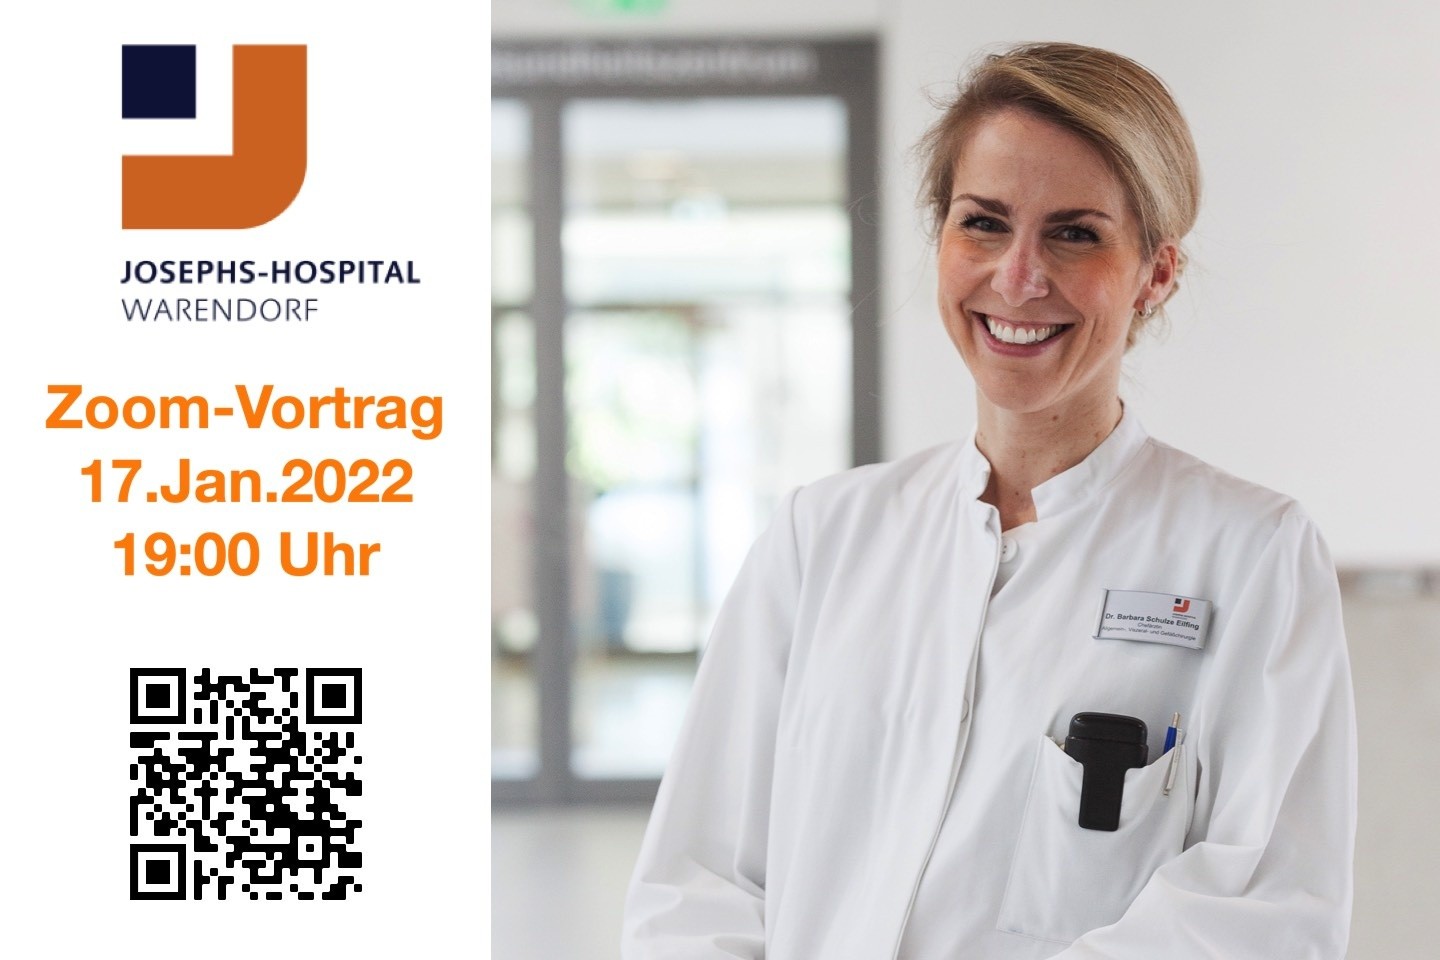 Adipositas, Josephs Hospital,Warendorf,Zoom Vortrag,Dr. Barbara Schulze Eilfing,